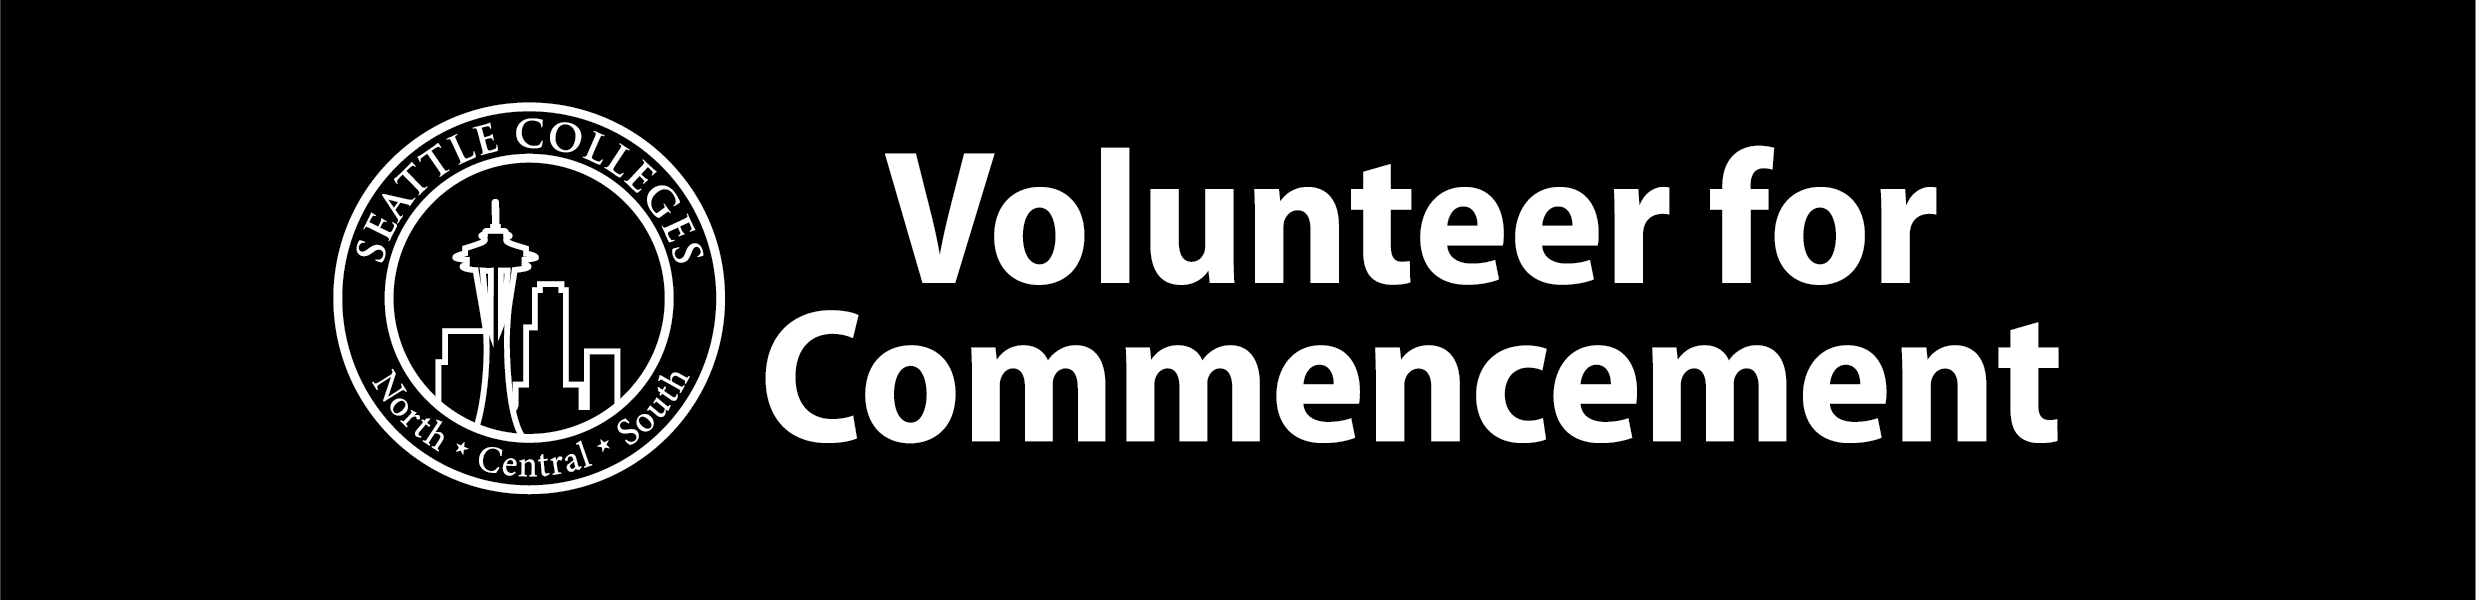 Volunteer for Commencement Banner